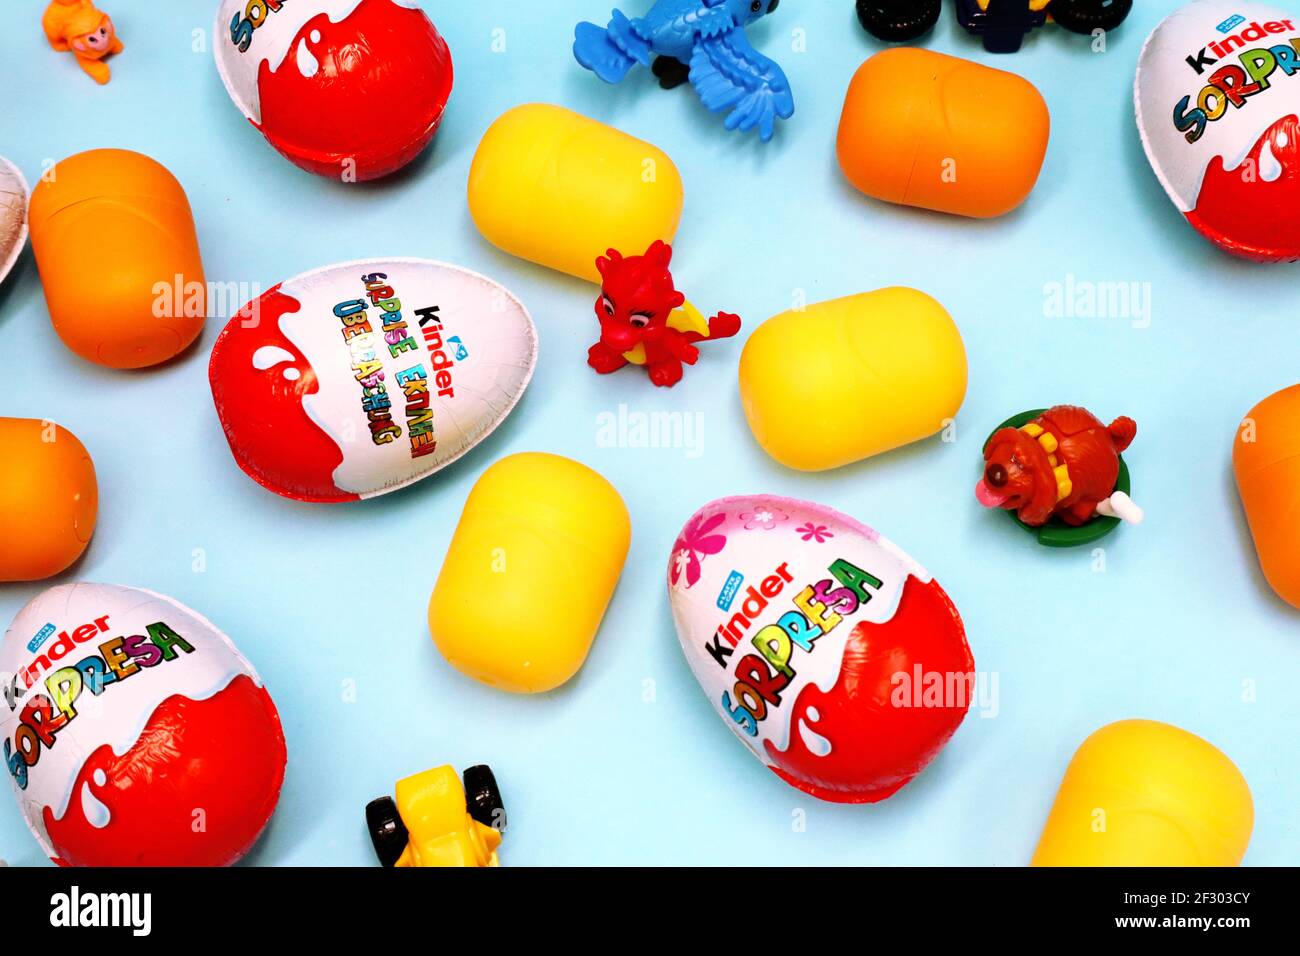 Hong Kong recalls popular Kinder chocolate eggs after link to